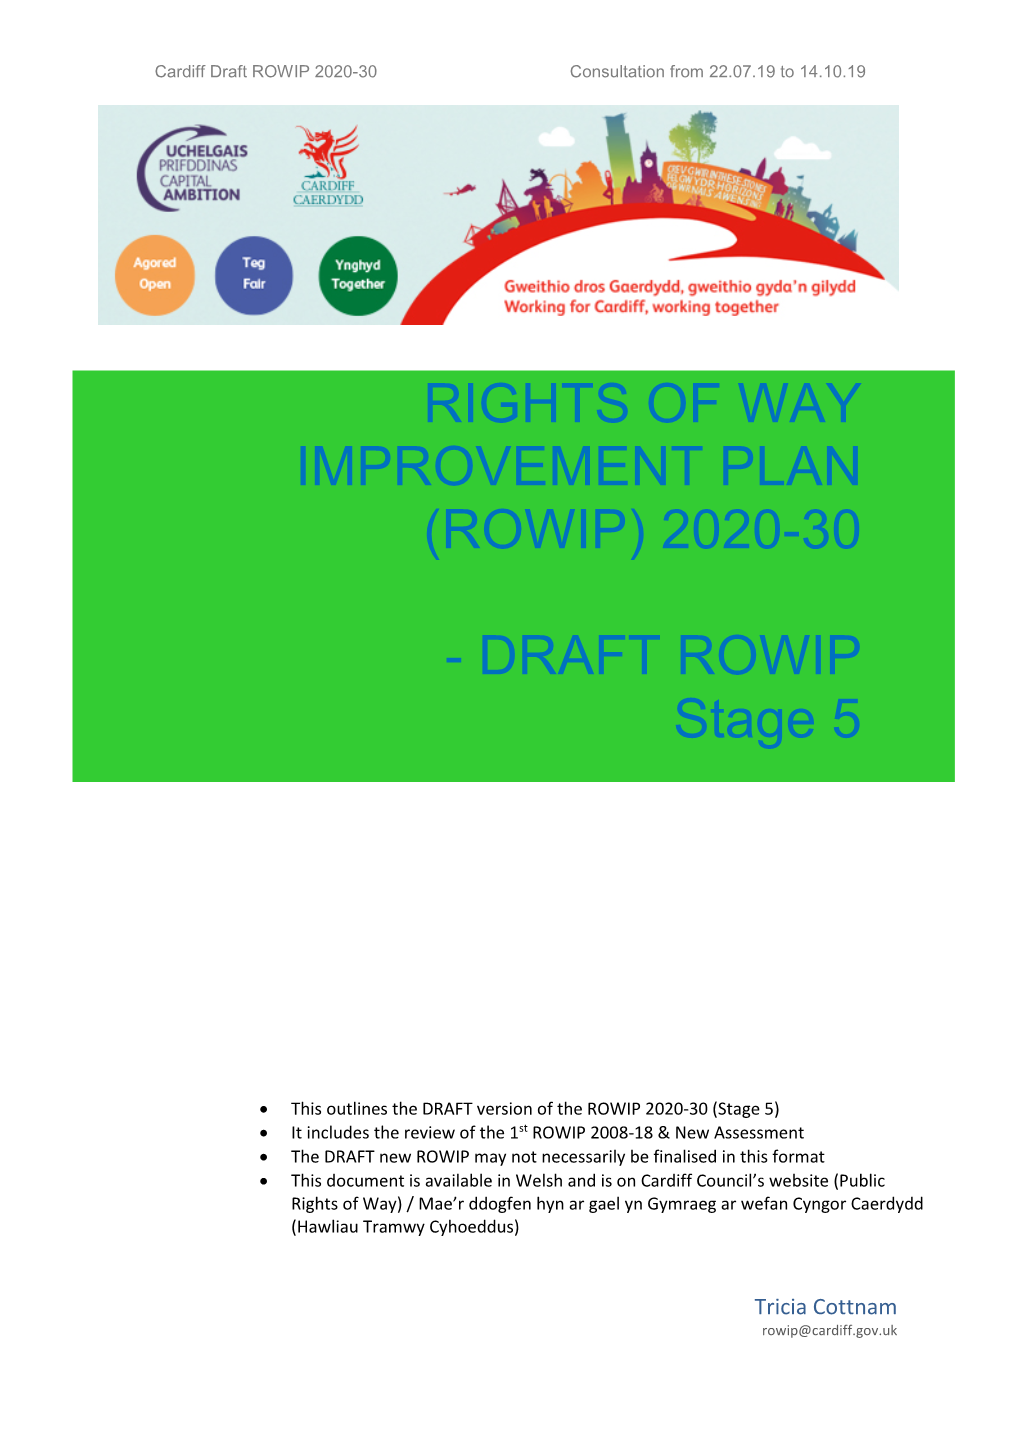 Rights of Way Improvement Plan (Rowip) 2020-30